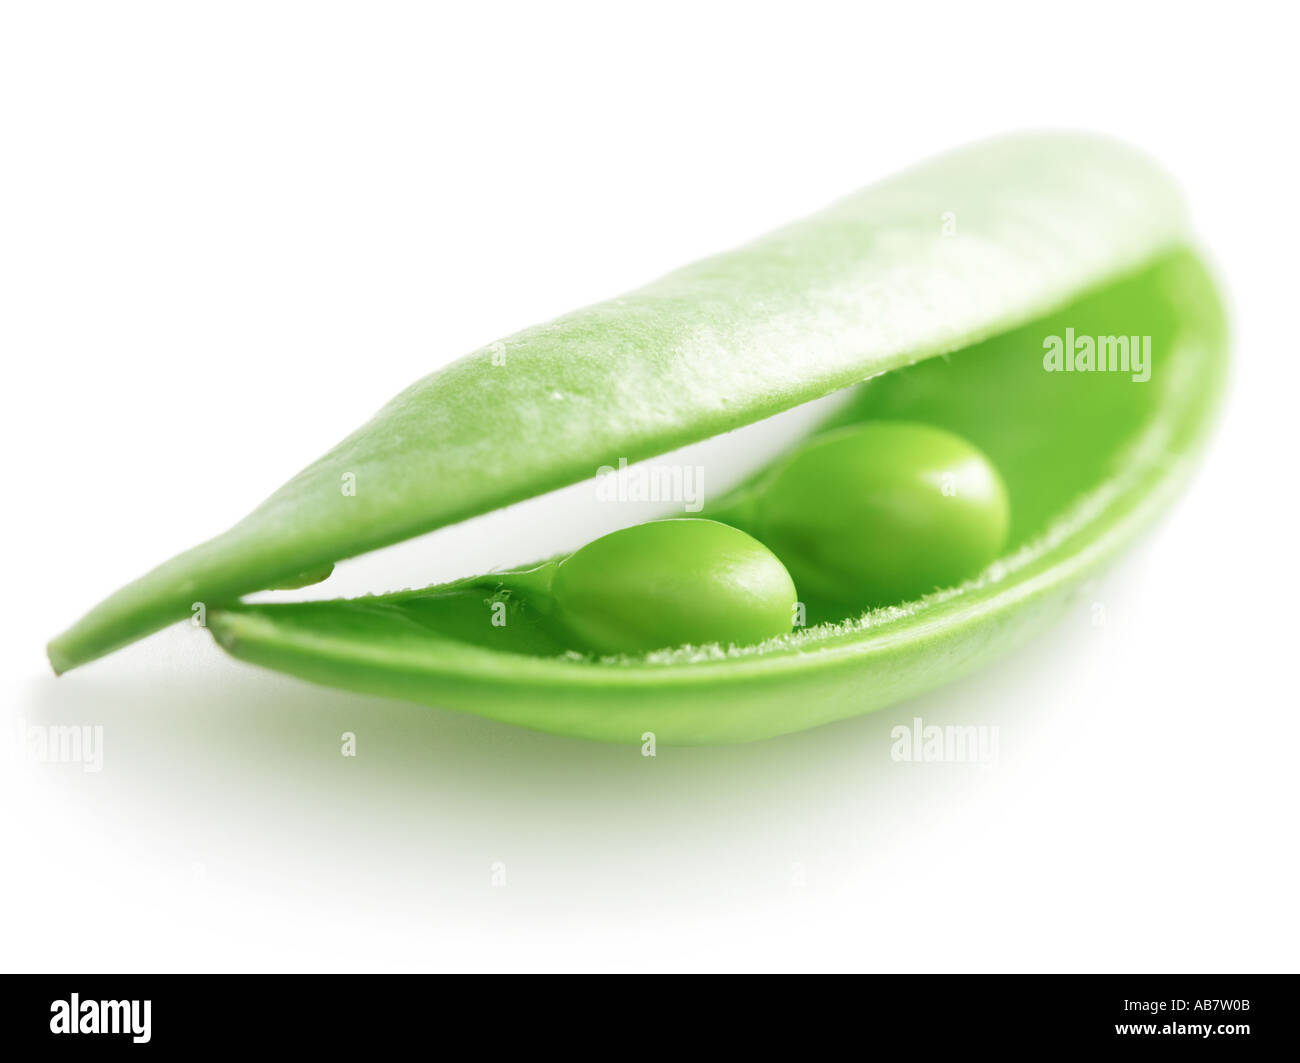 https://c8.alamy.com/comp/AB7W0B/two-peas-in-a-pod-concept-white-background-AB7W0B.jpg